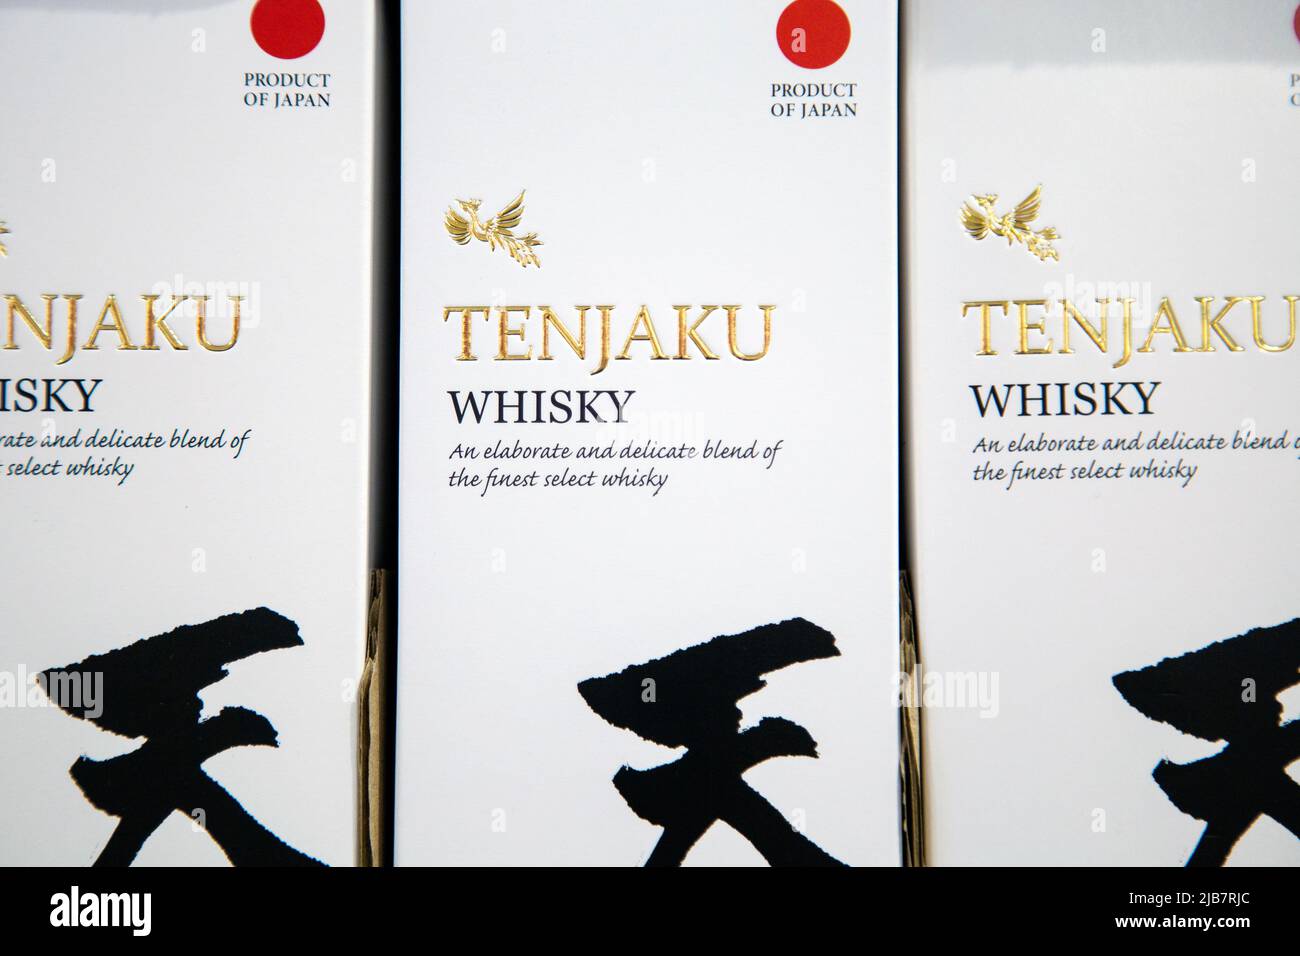 Boxes of Tenjaku Japanese Whisky Stock Photo